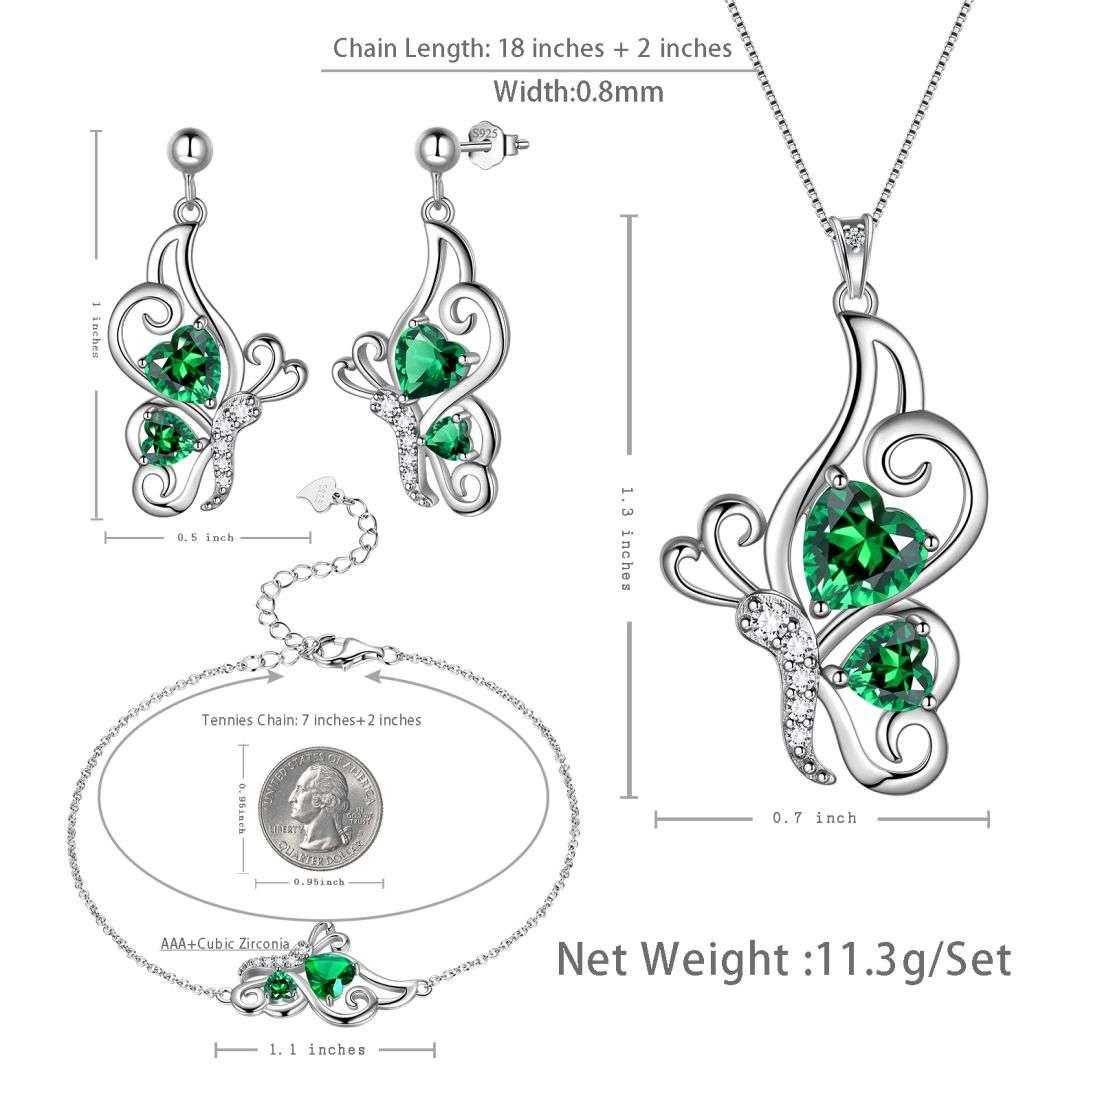 Butterfly Birthstone May Emerald Jewelry Set 4PCS - Jewelry Set - Aurora Tears